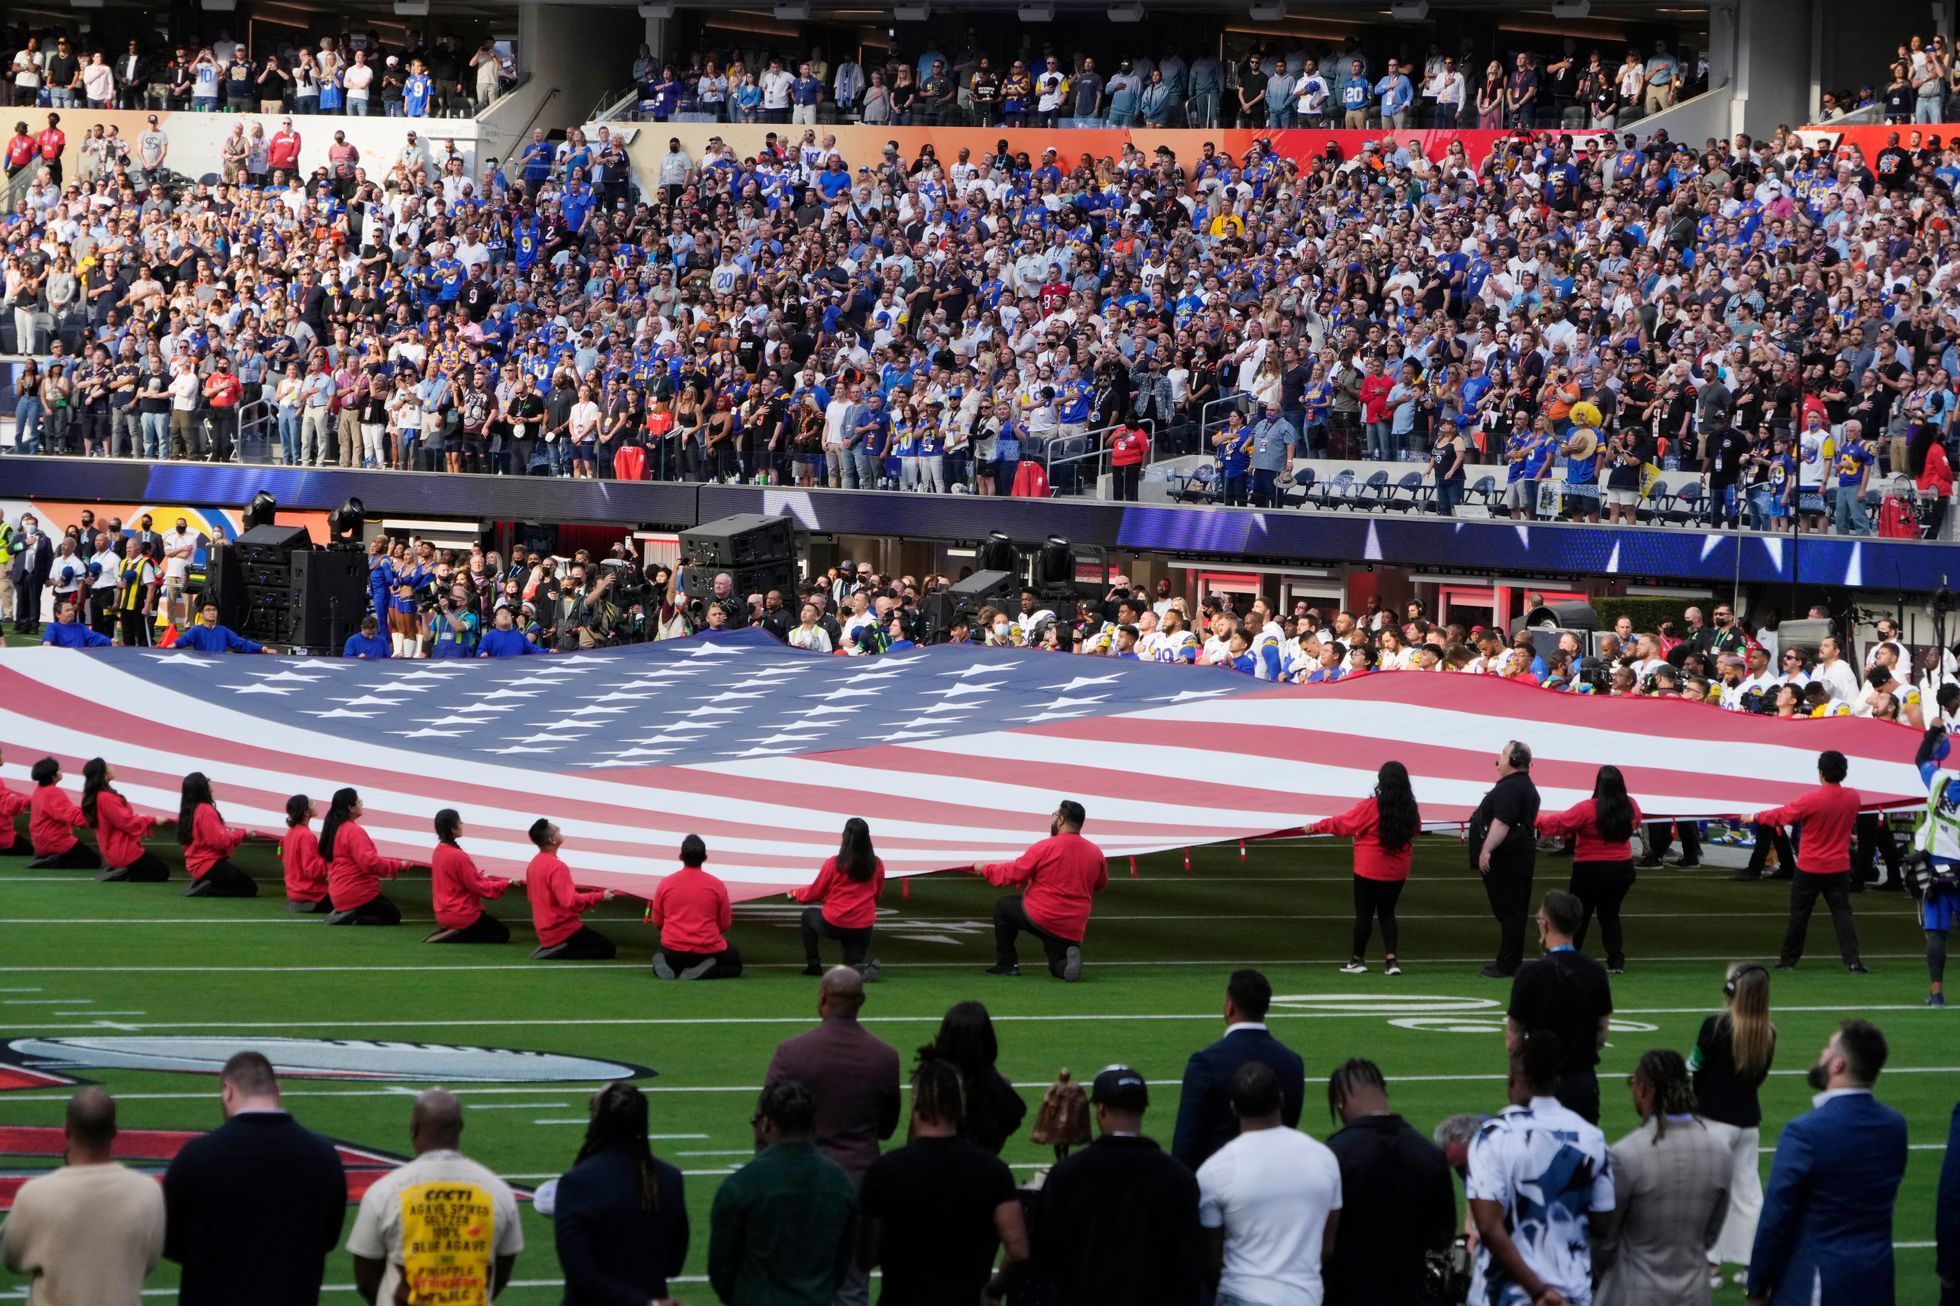 Předzápasový ceremoniál pře Super Bowlem LVI 2022 LA Rams - Cincinnati Bengals